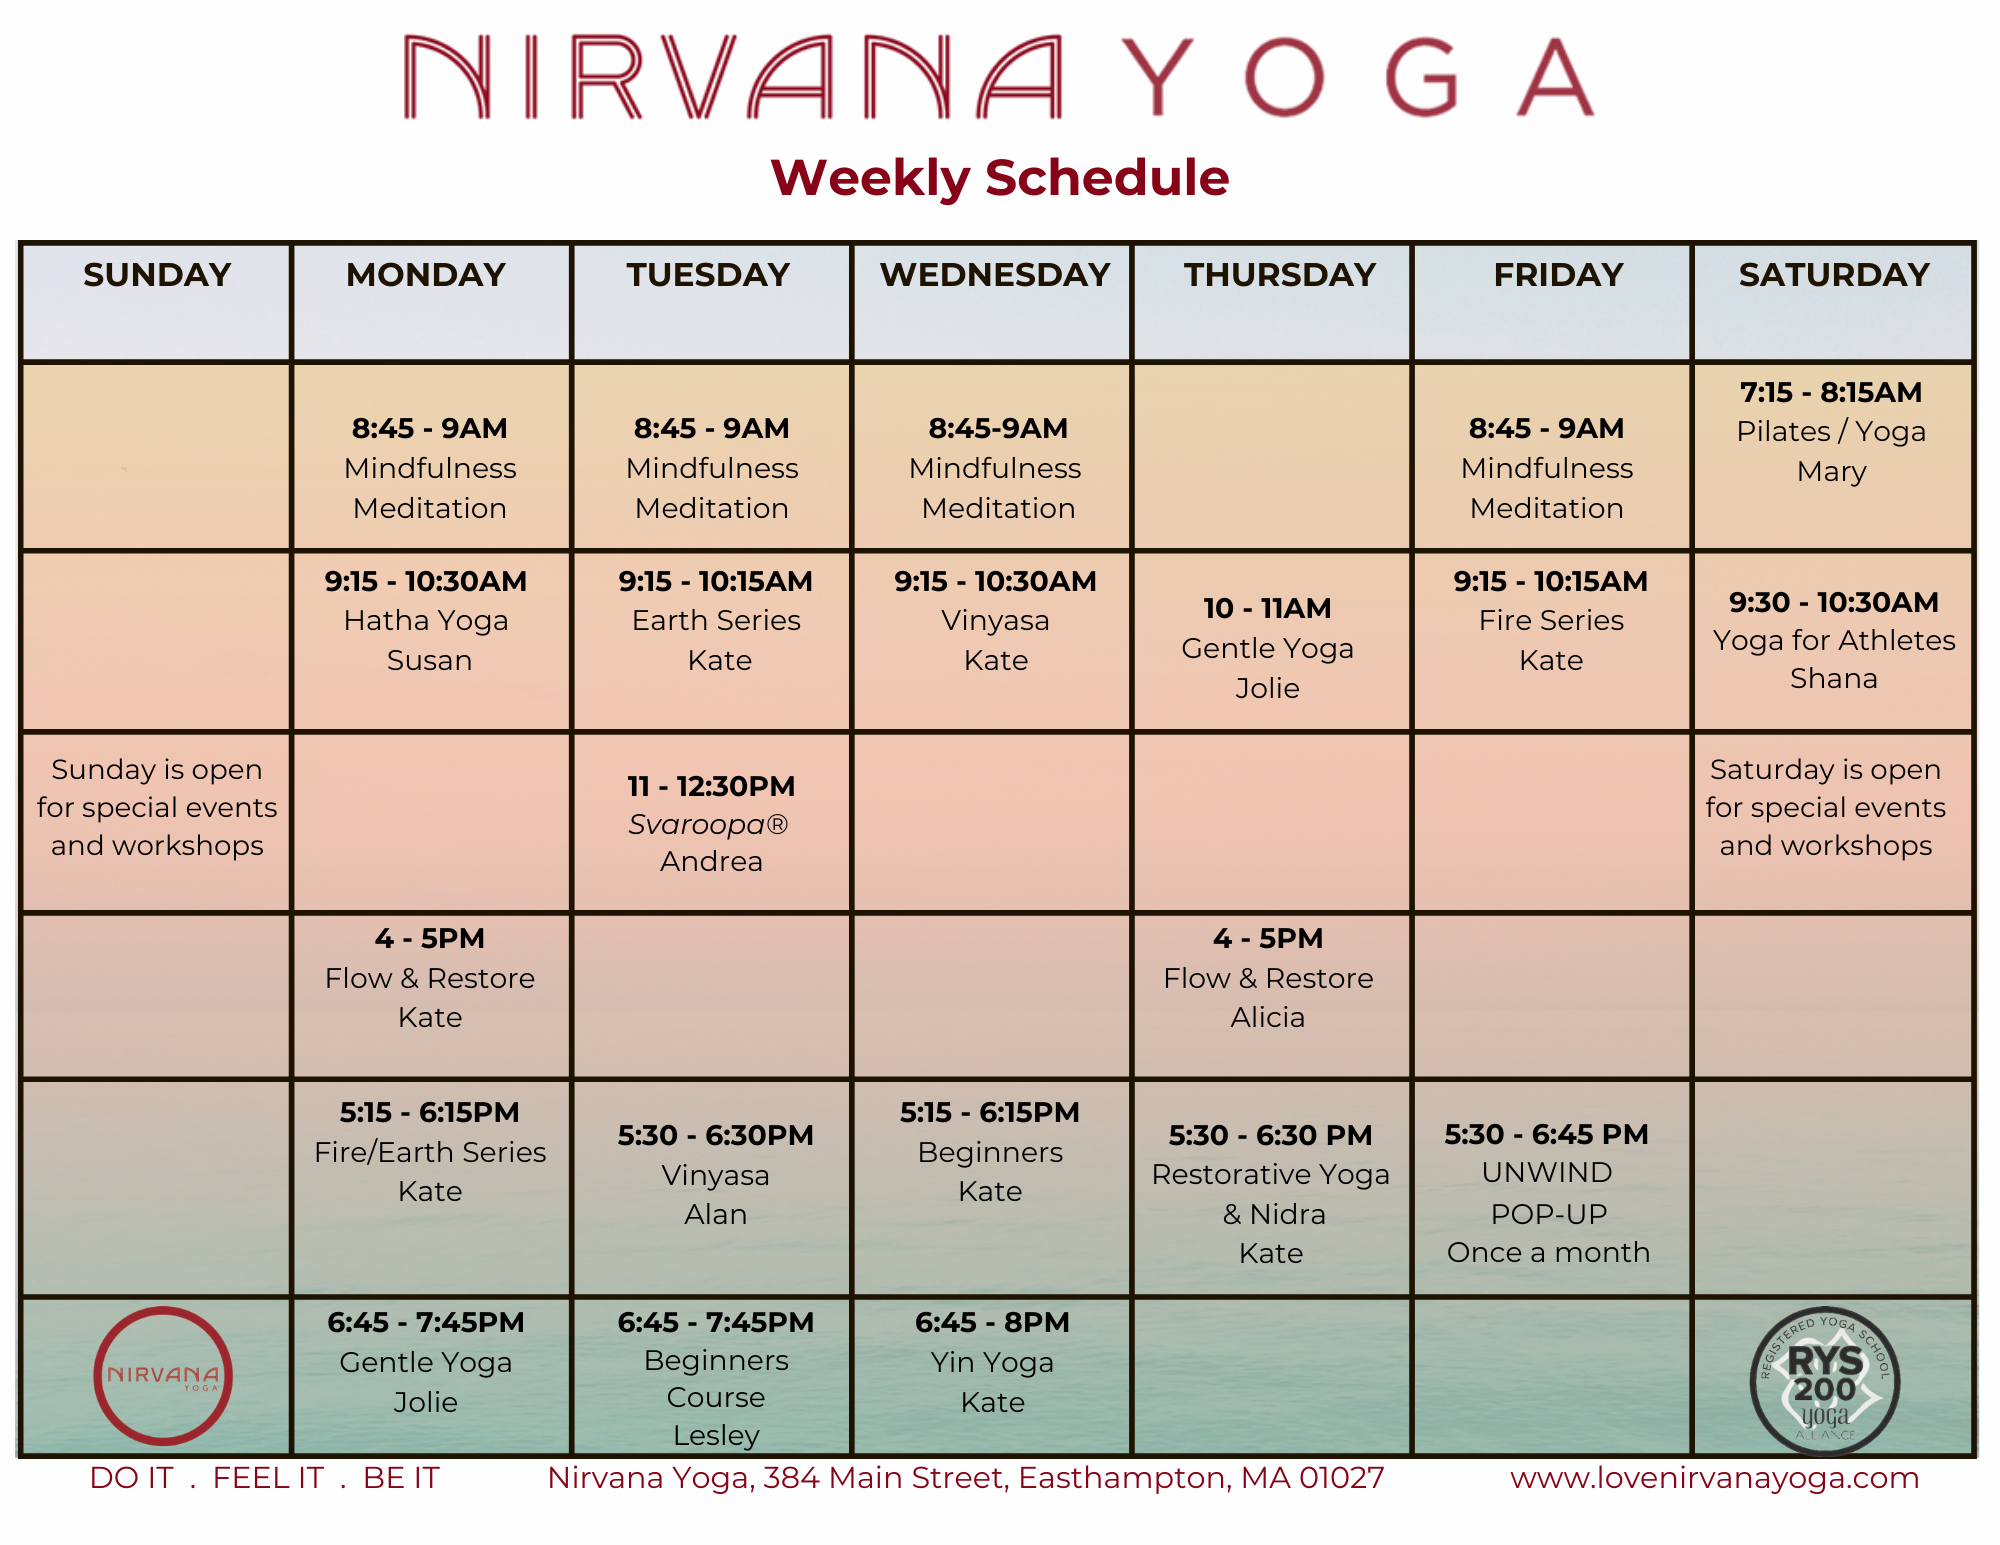 Yoga Schedule